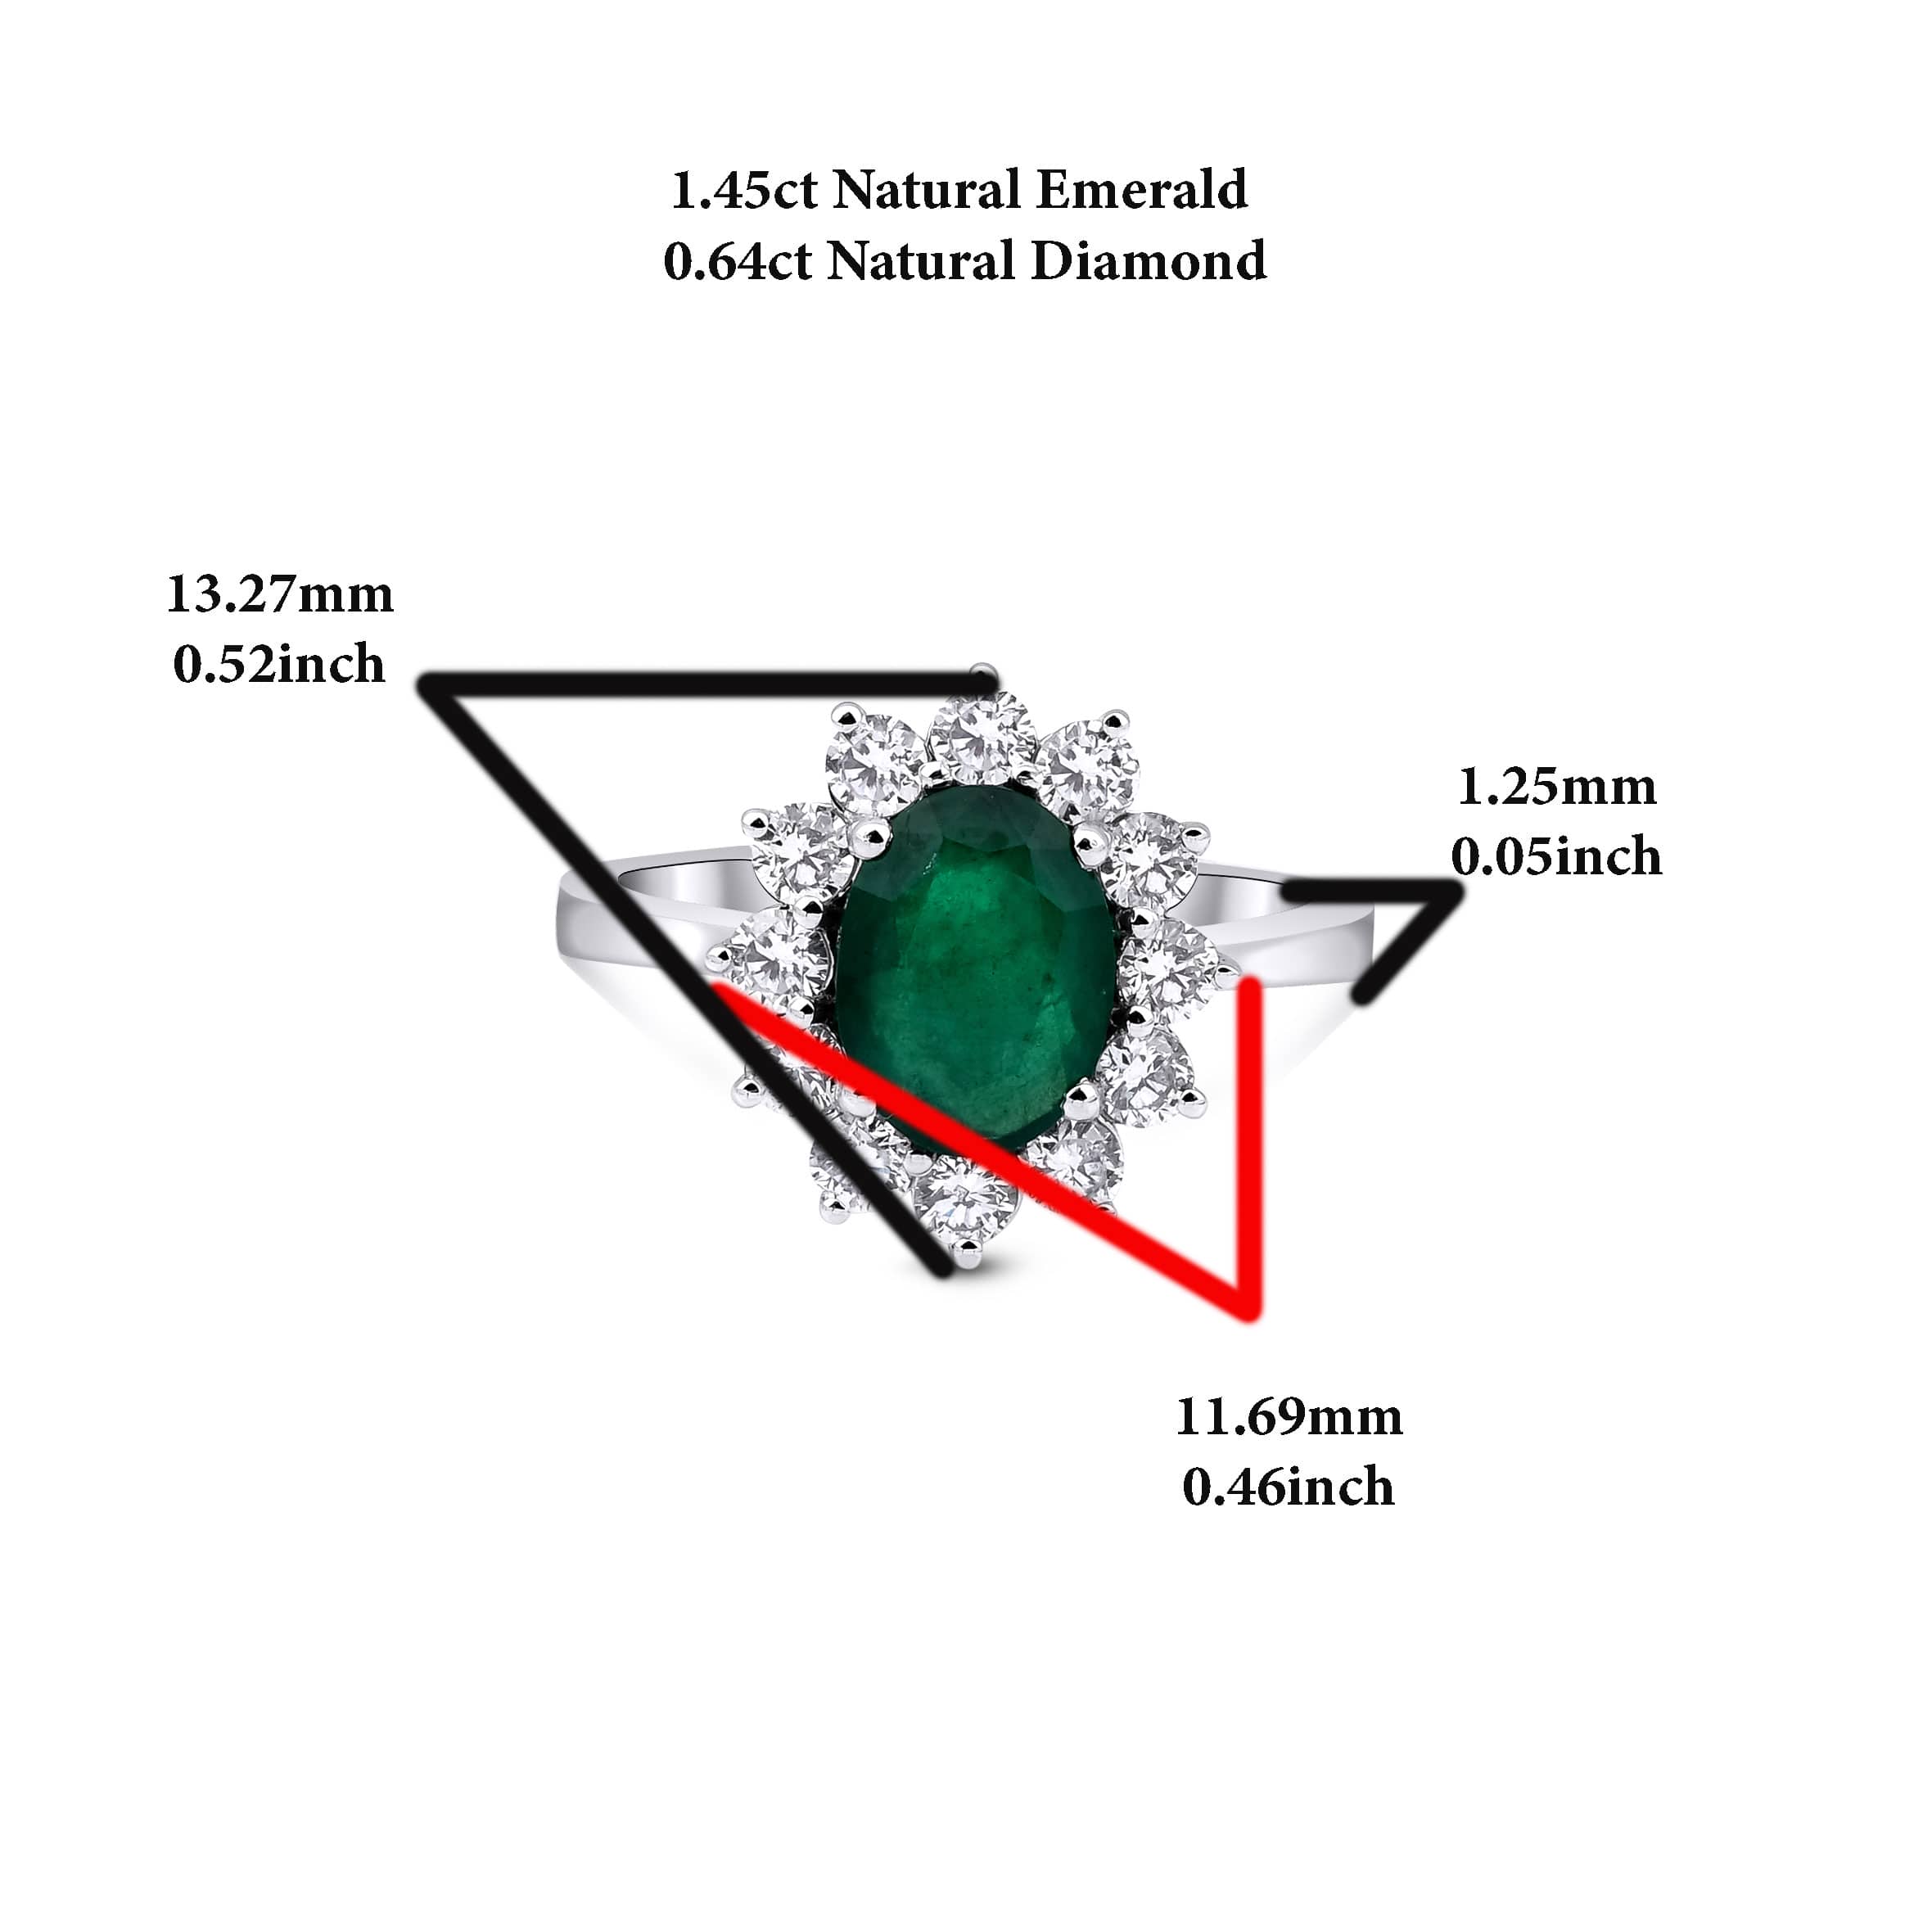 Emerald And Diamond Halo 2.09ct Ring